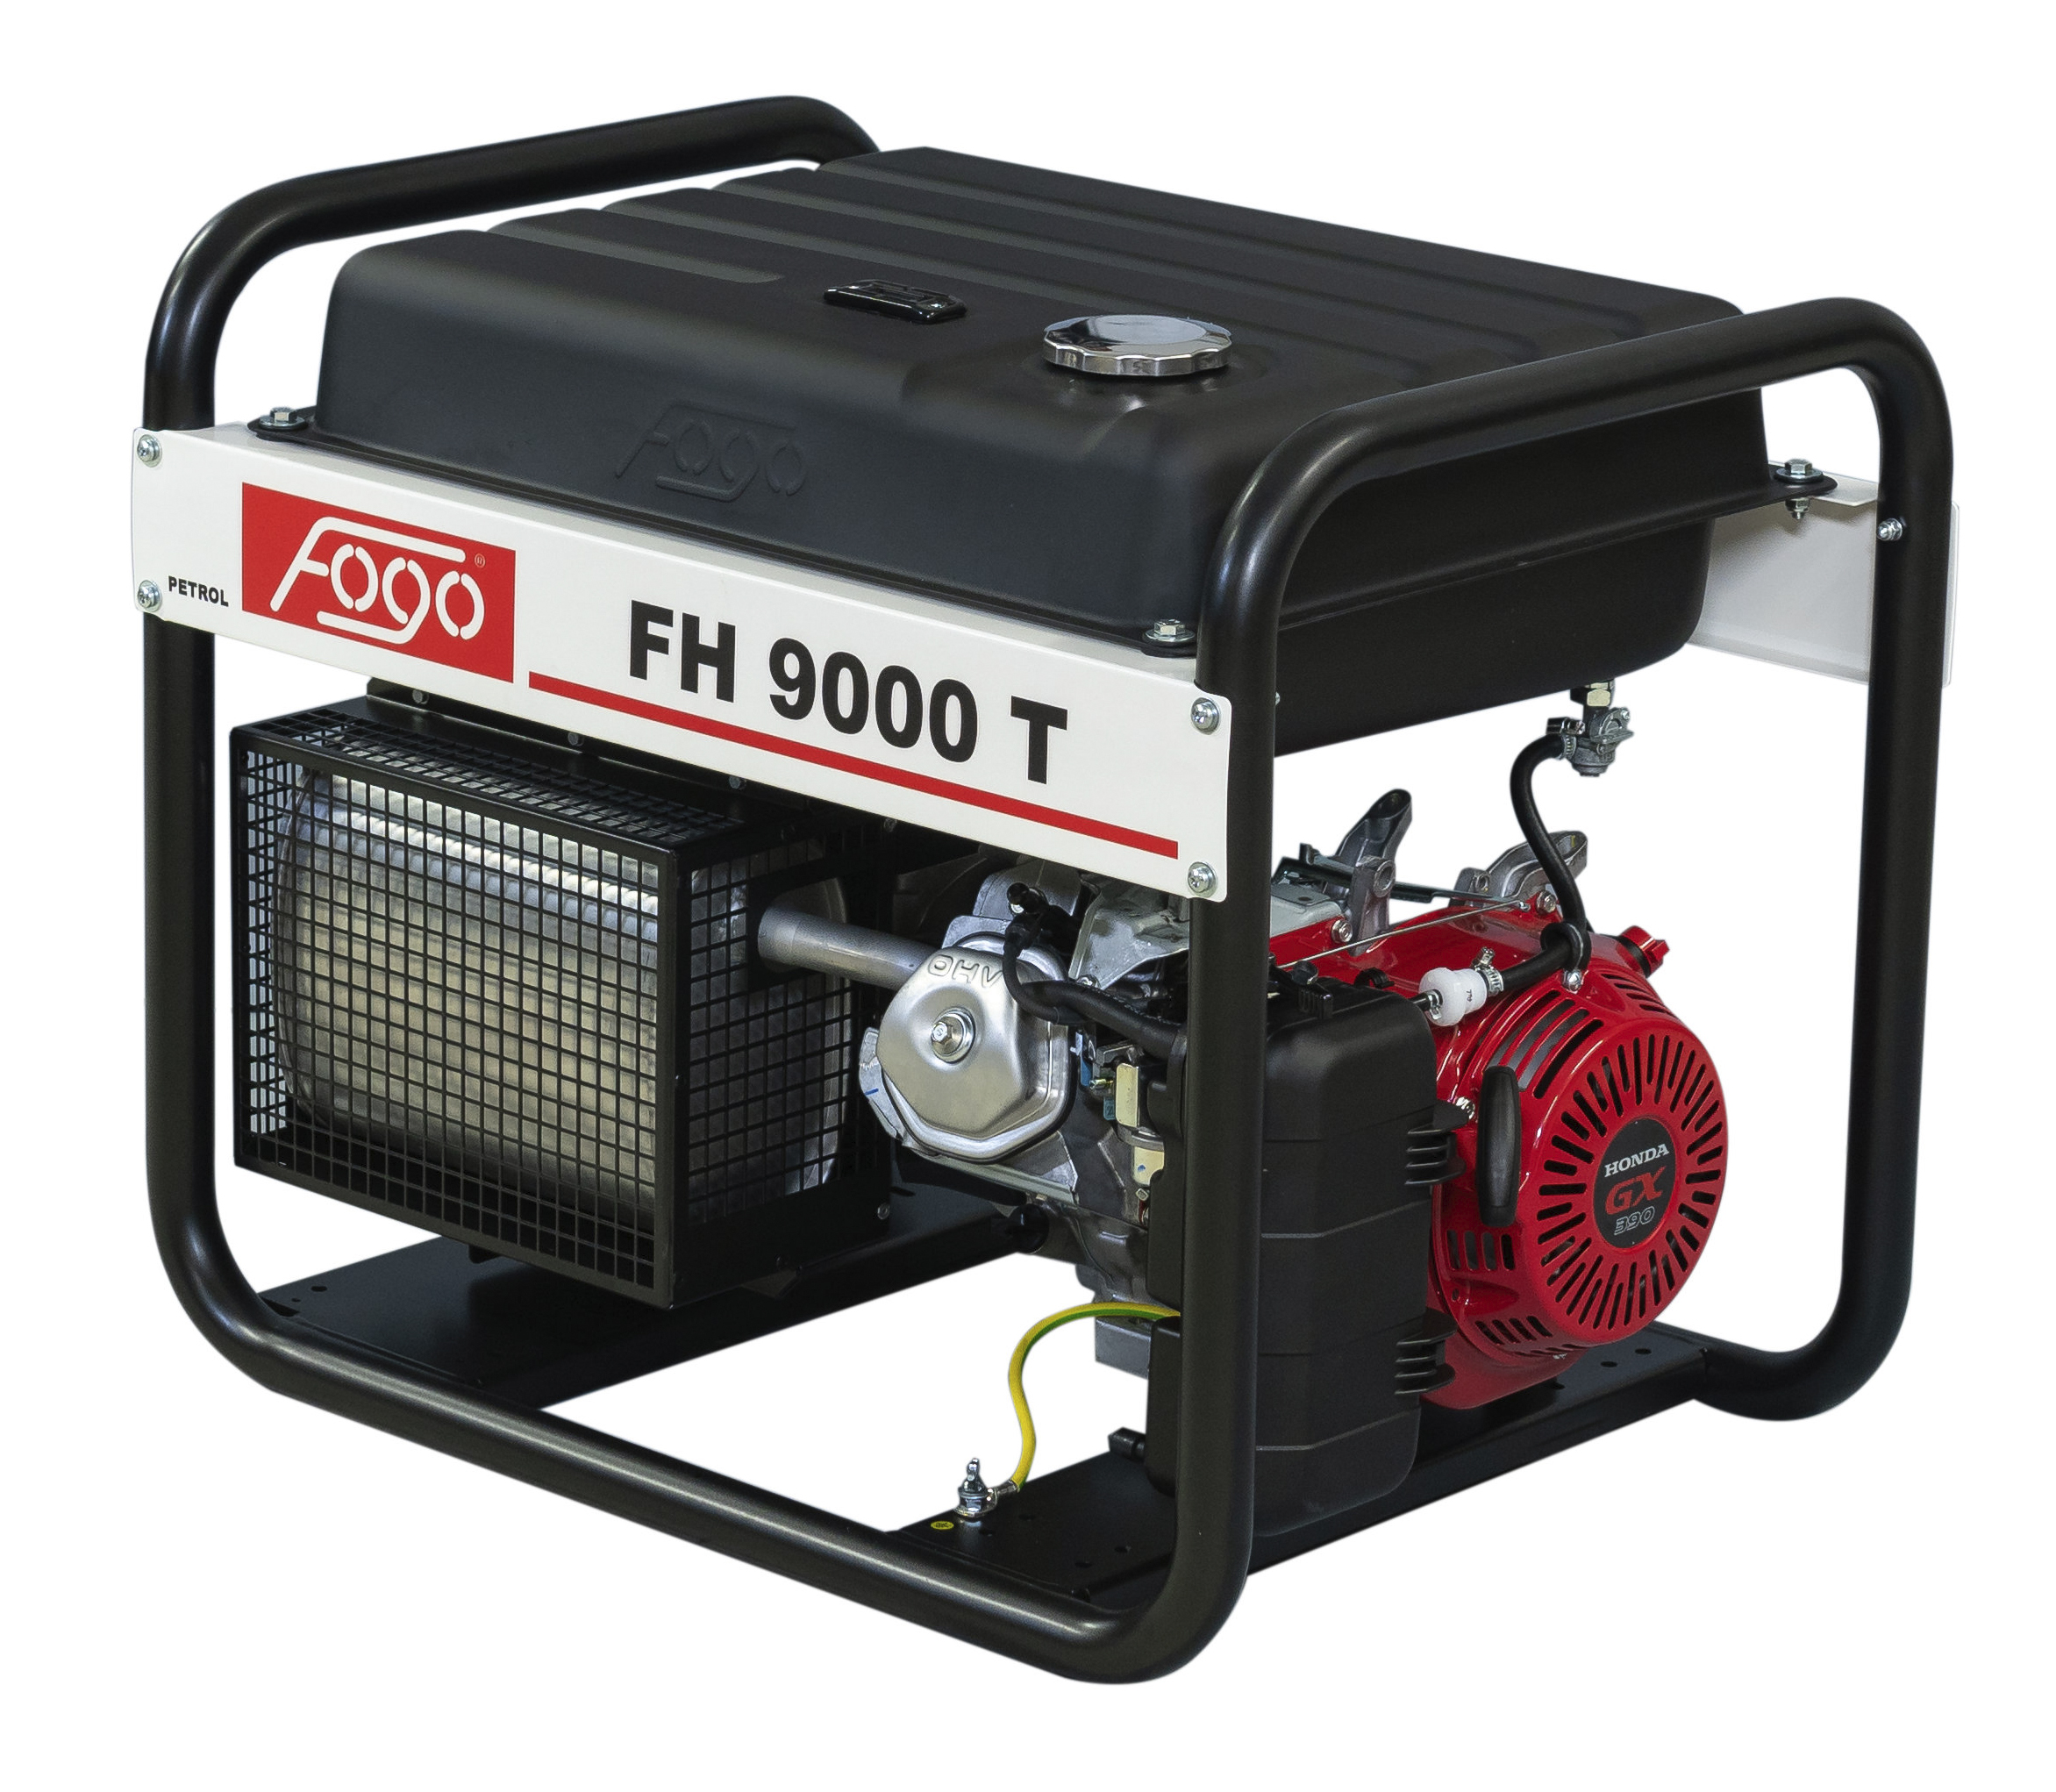 FH9000T generator 400/230v, 8,7/6,2 kva 45 tank, Honda motor, stik - Eftf. A/S